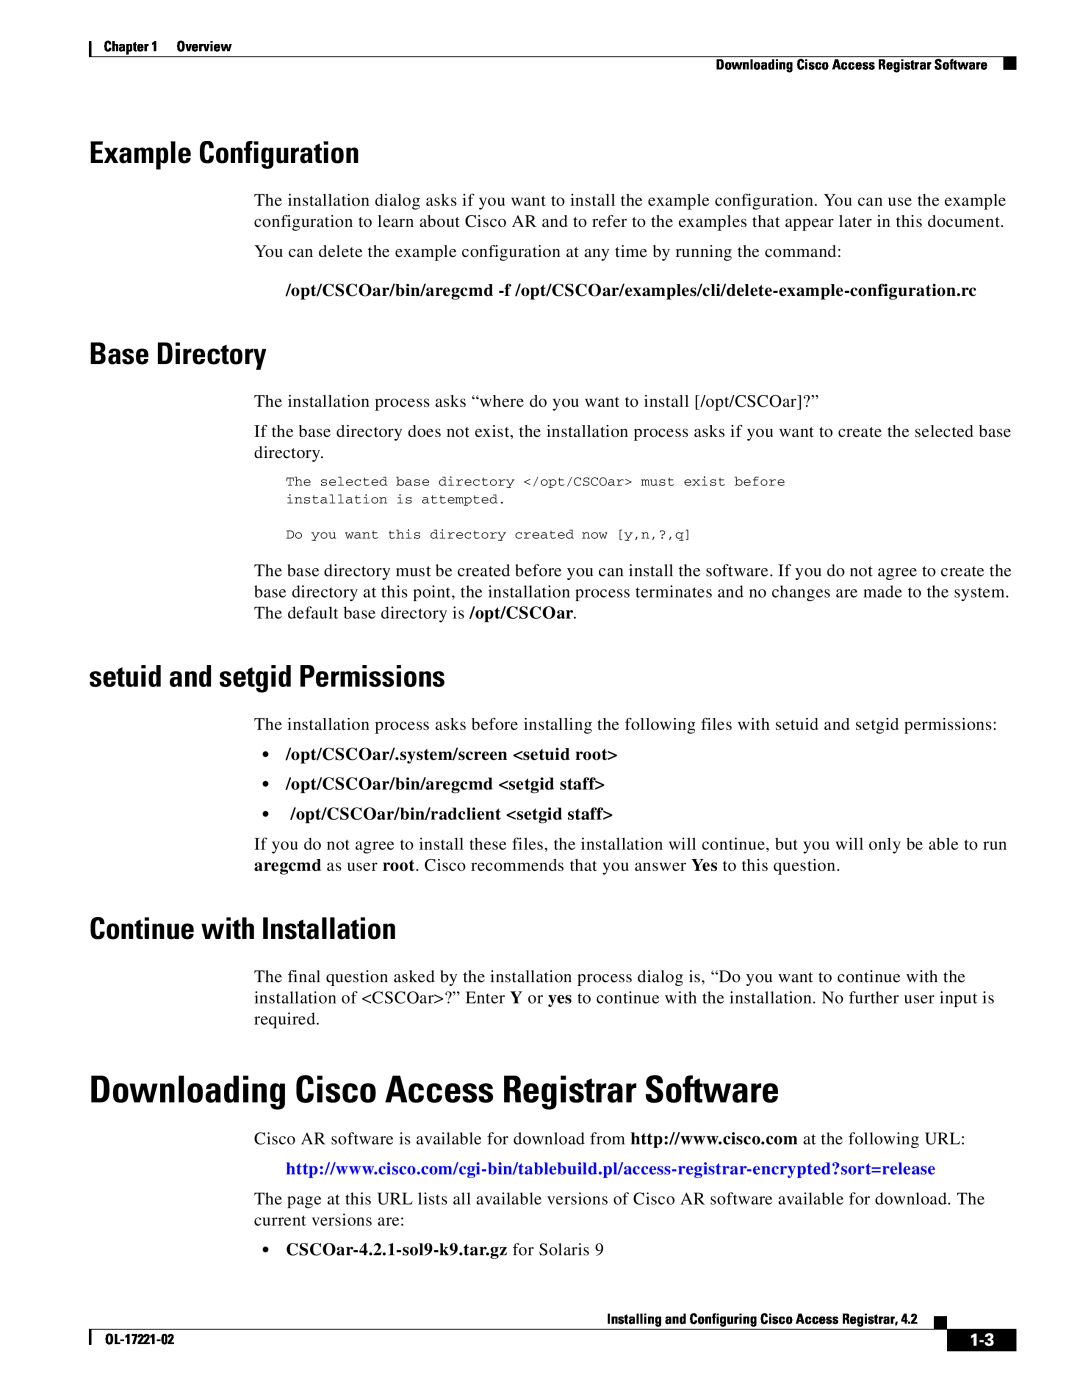 Cisco Systems 4.2 manual Downloading Cisco Access Registrar Software, Example Configuration, Base Directory 